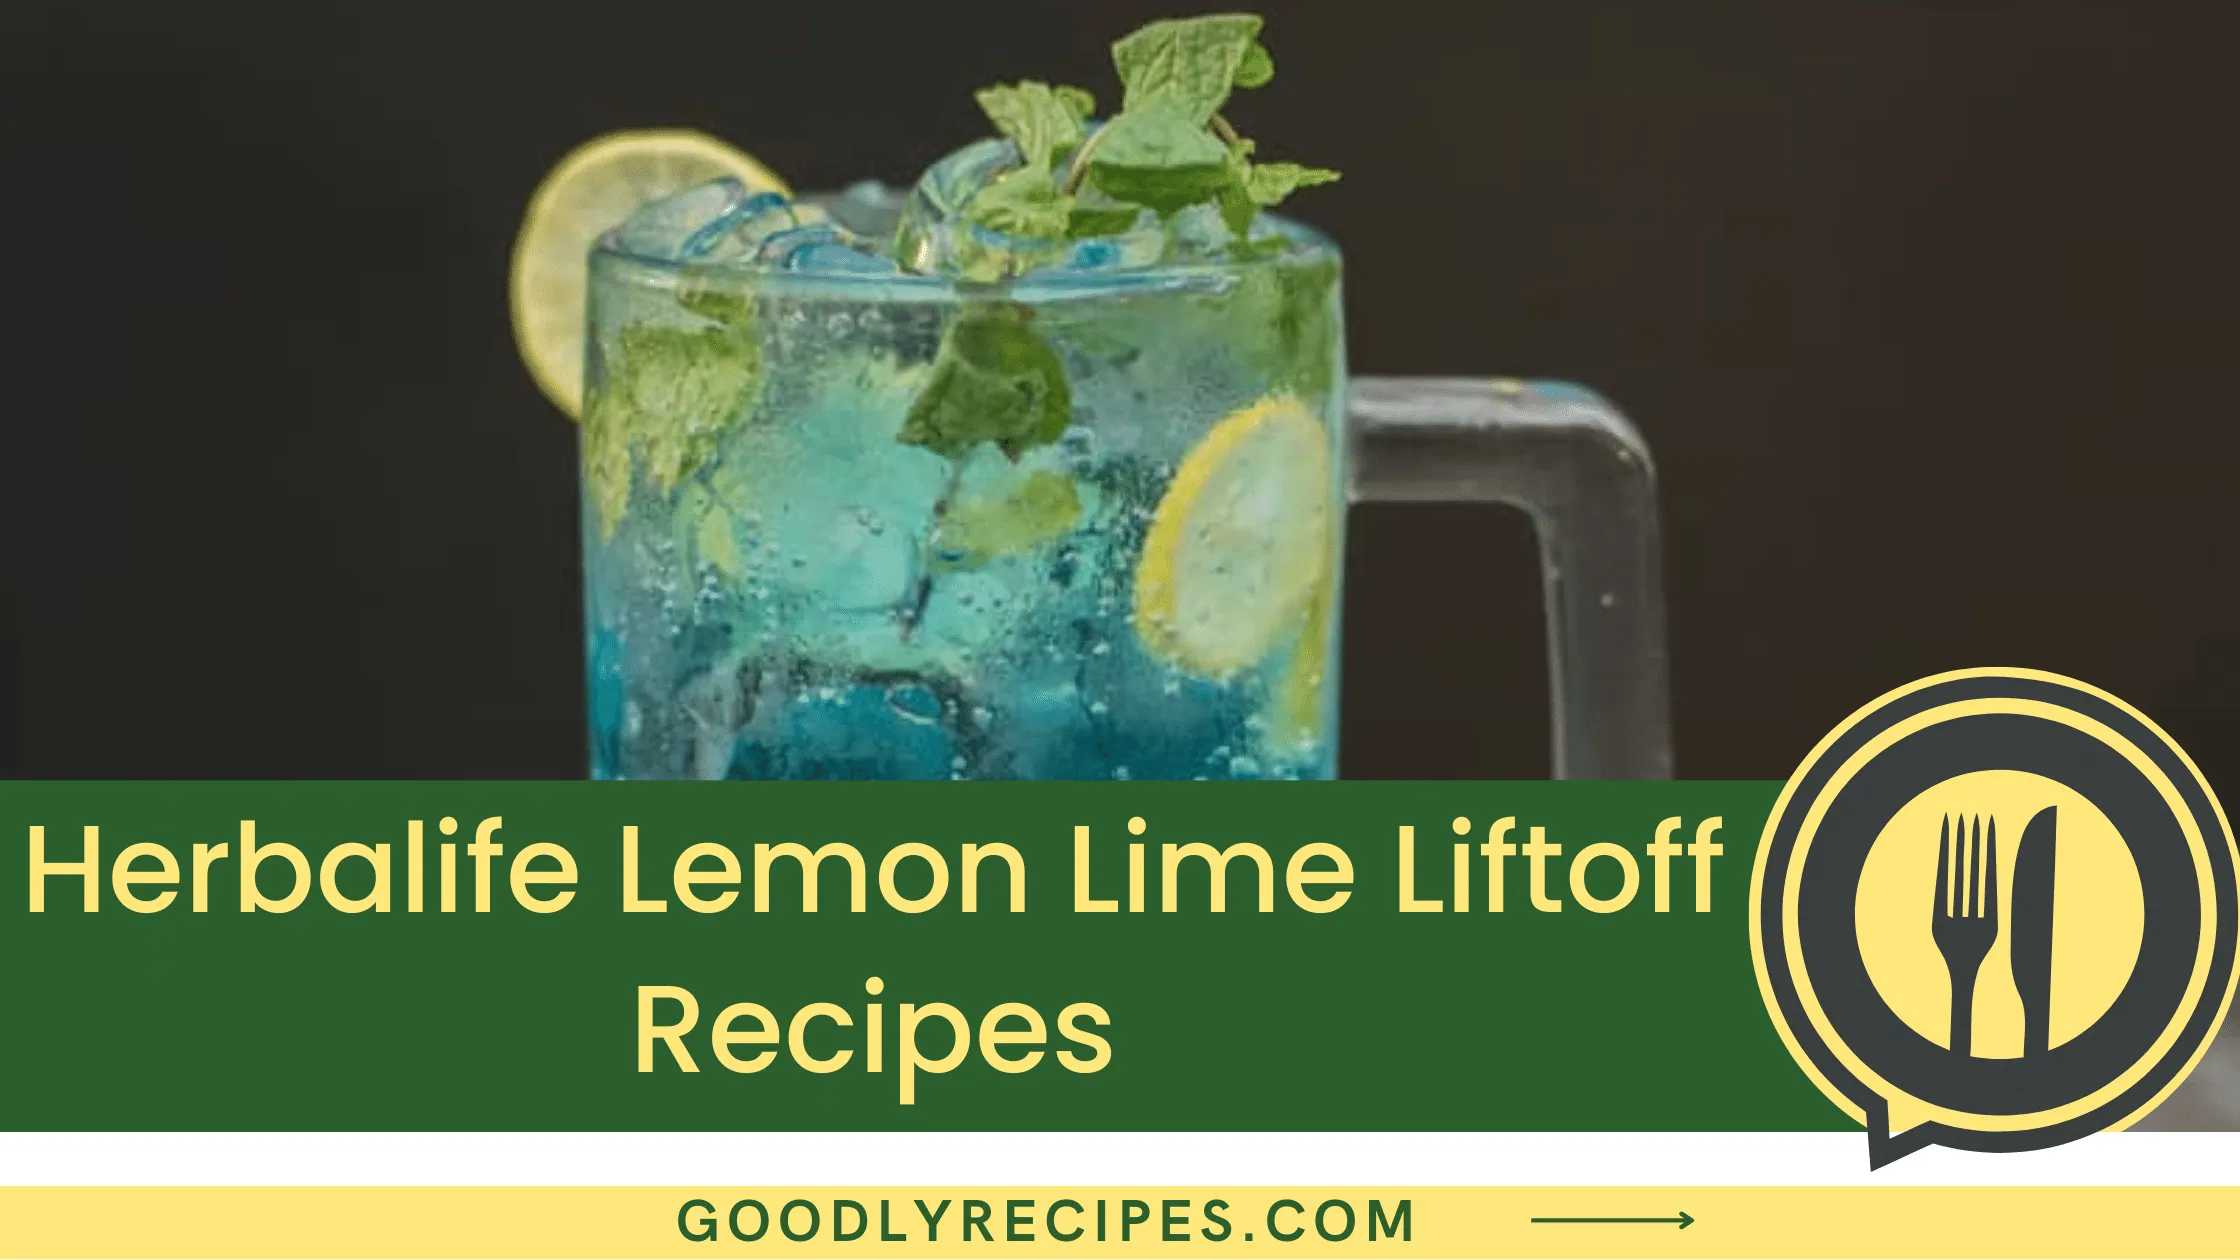 Herbalife Lemon Lime Liftoff Recipes